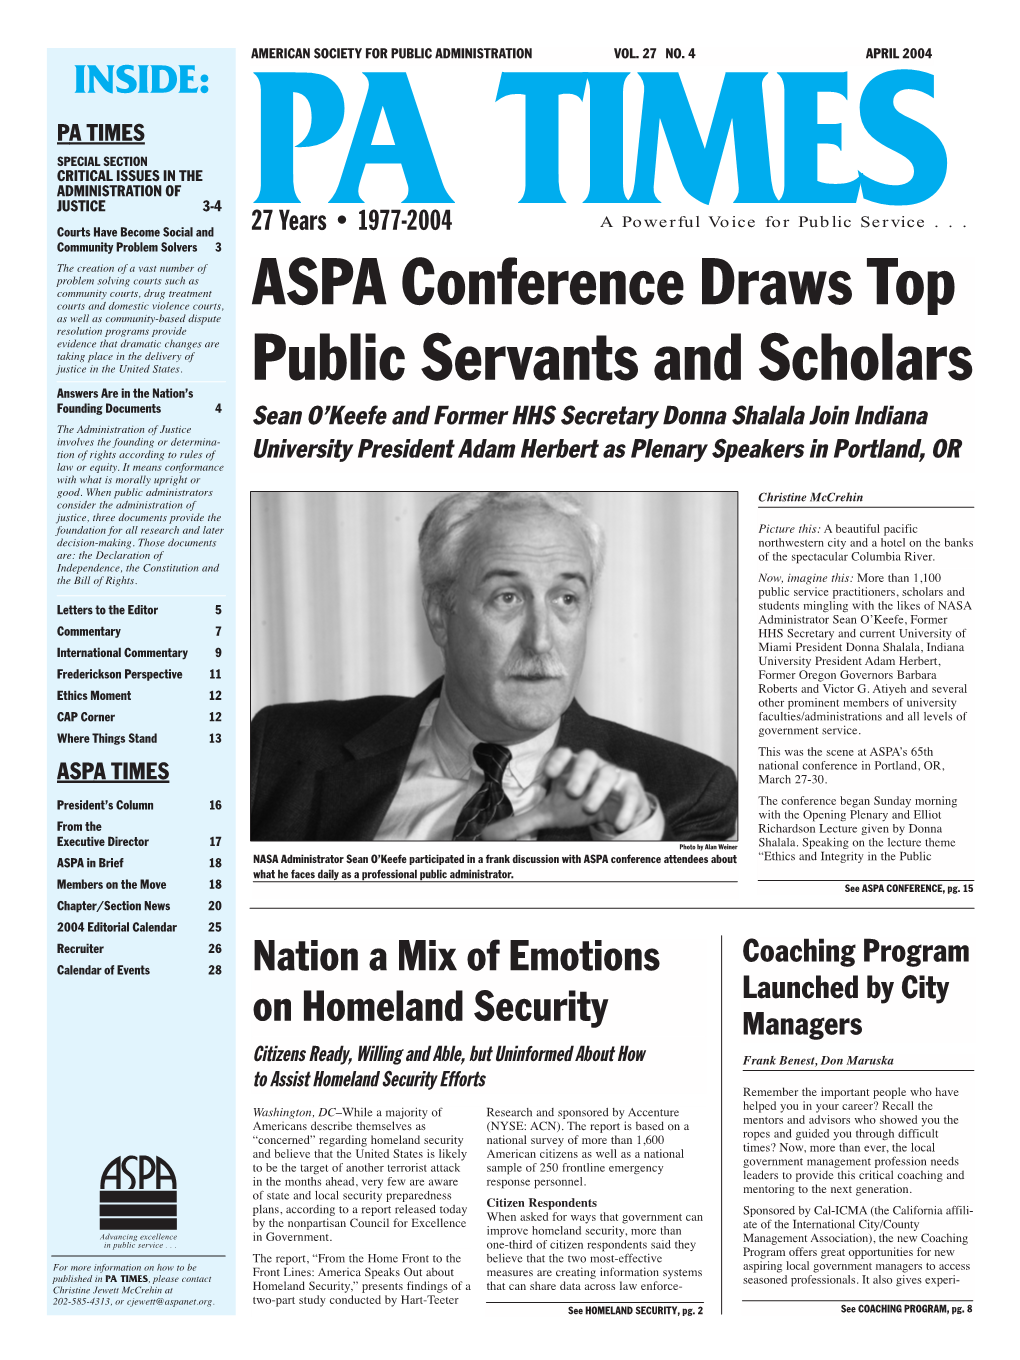 ASPA Conference Draws Top Public Servants and Scholars